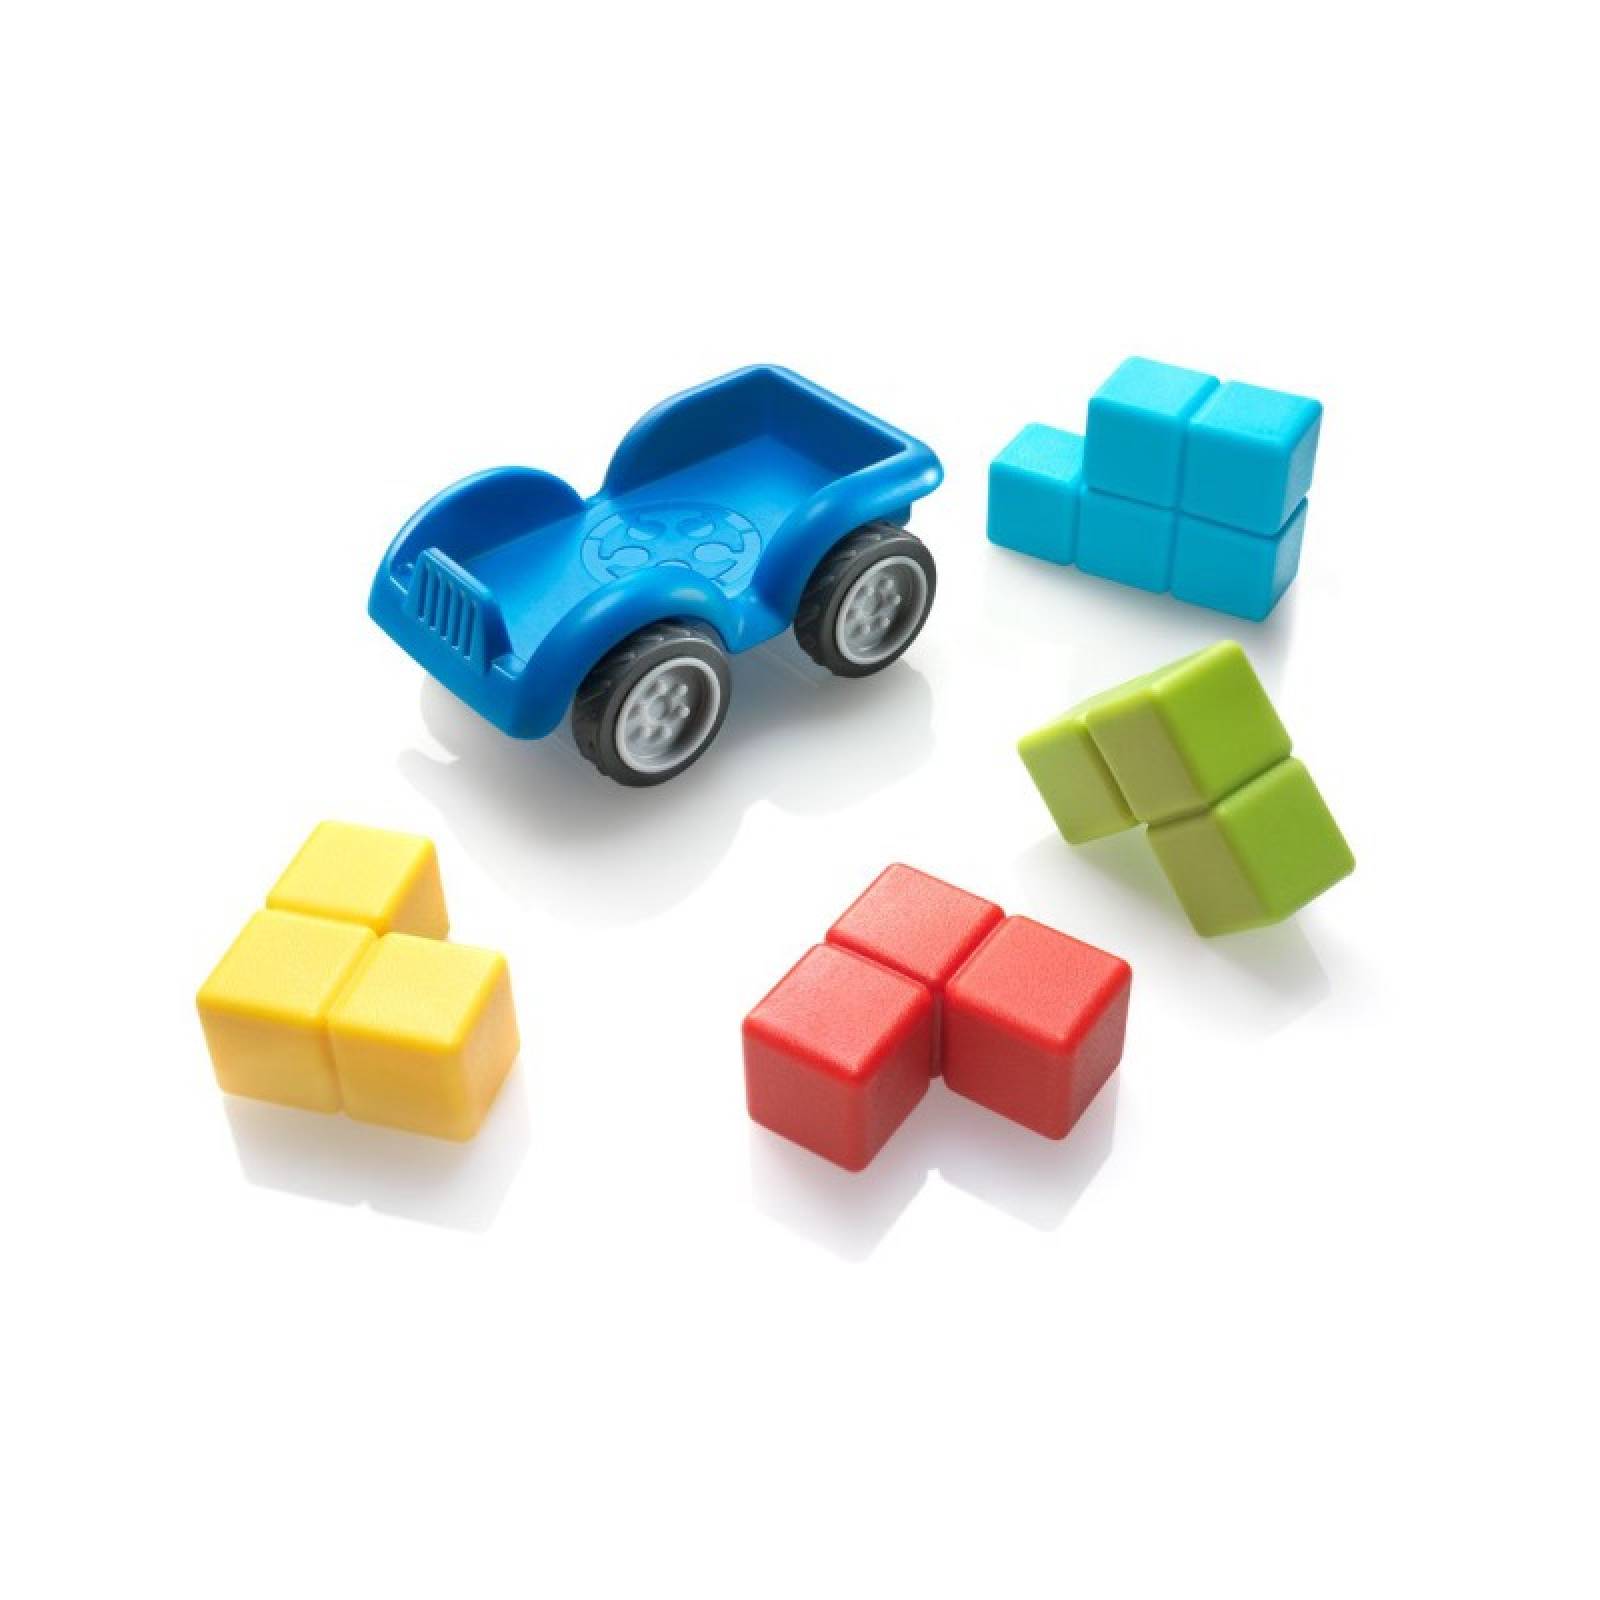 Smartcar Mini Game By Smart Games 6+ thumbnails